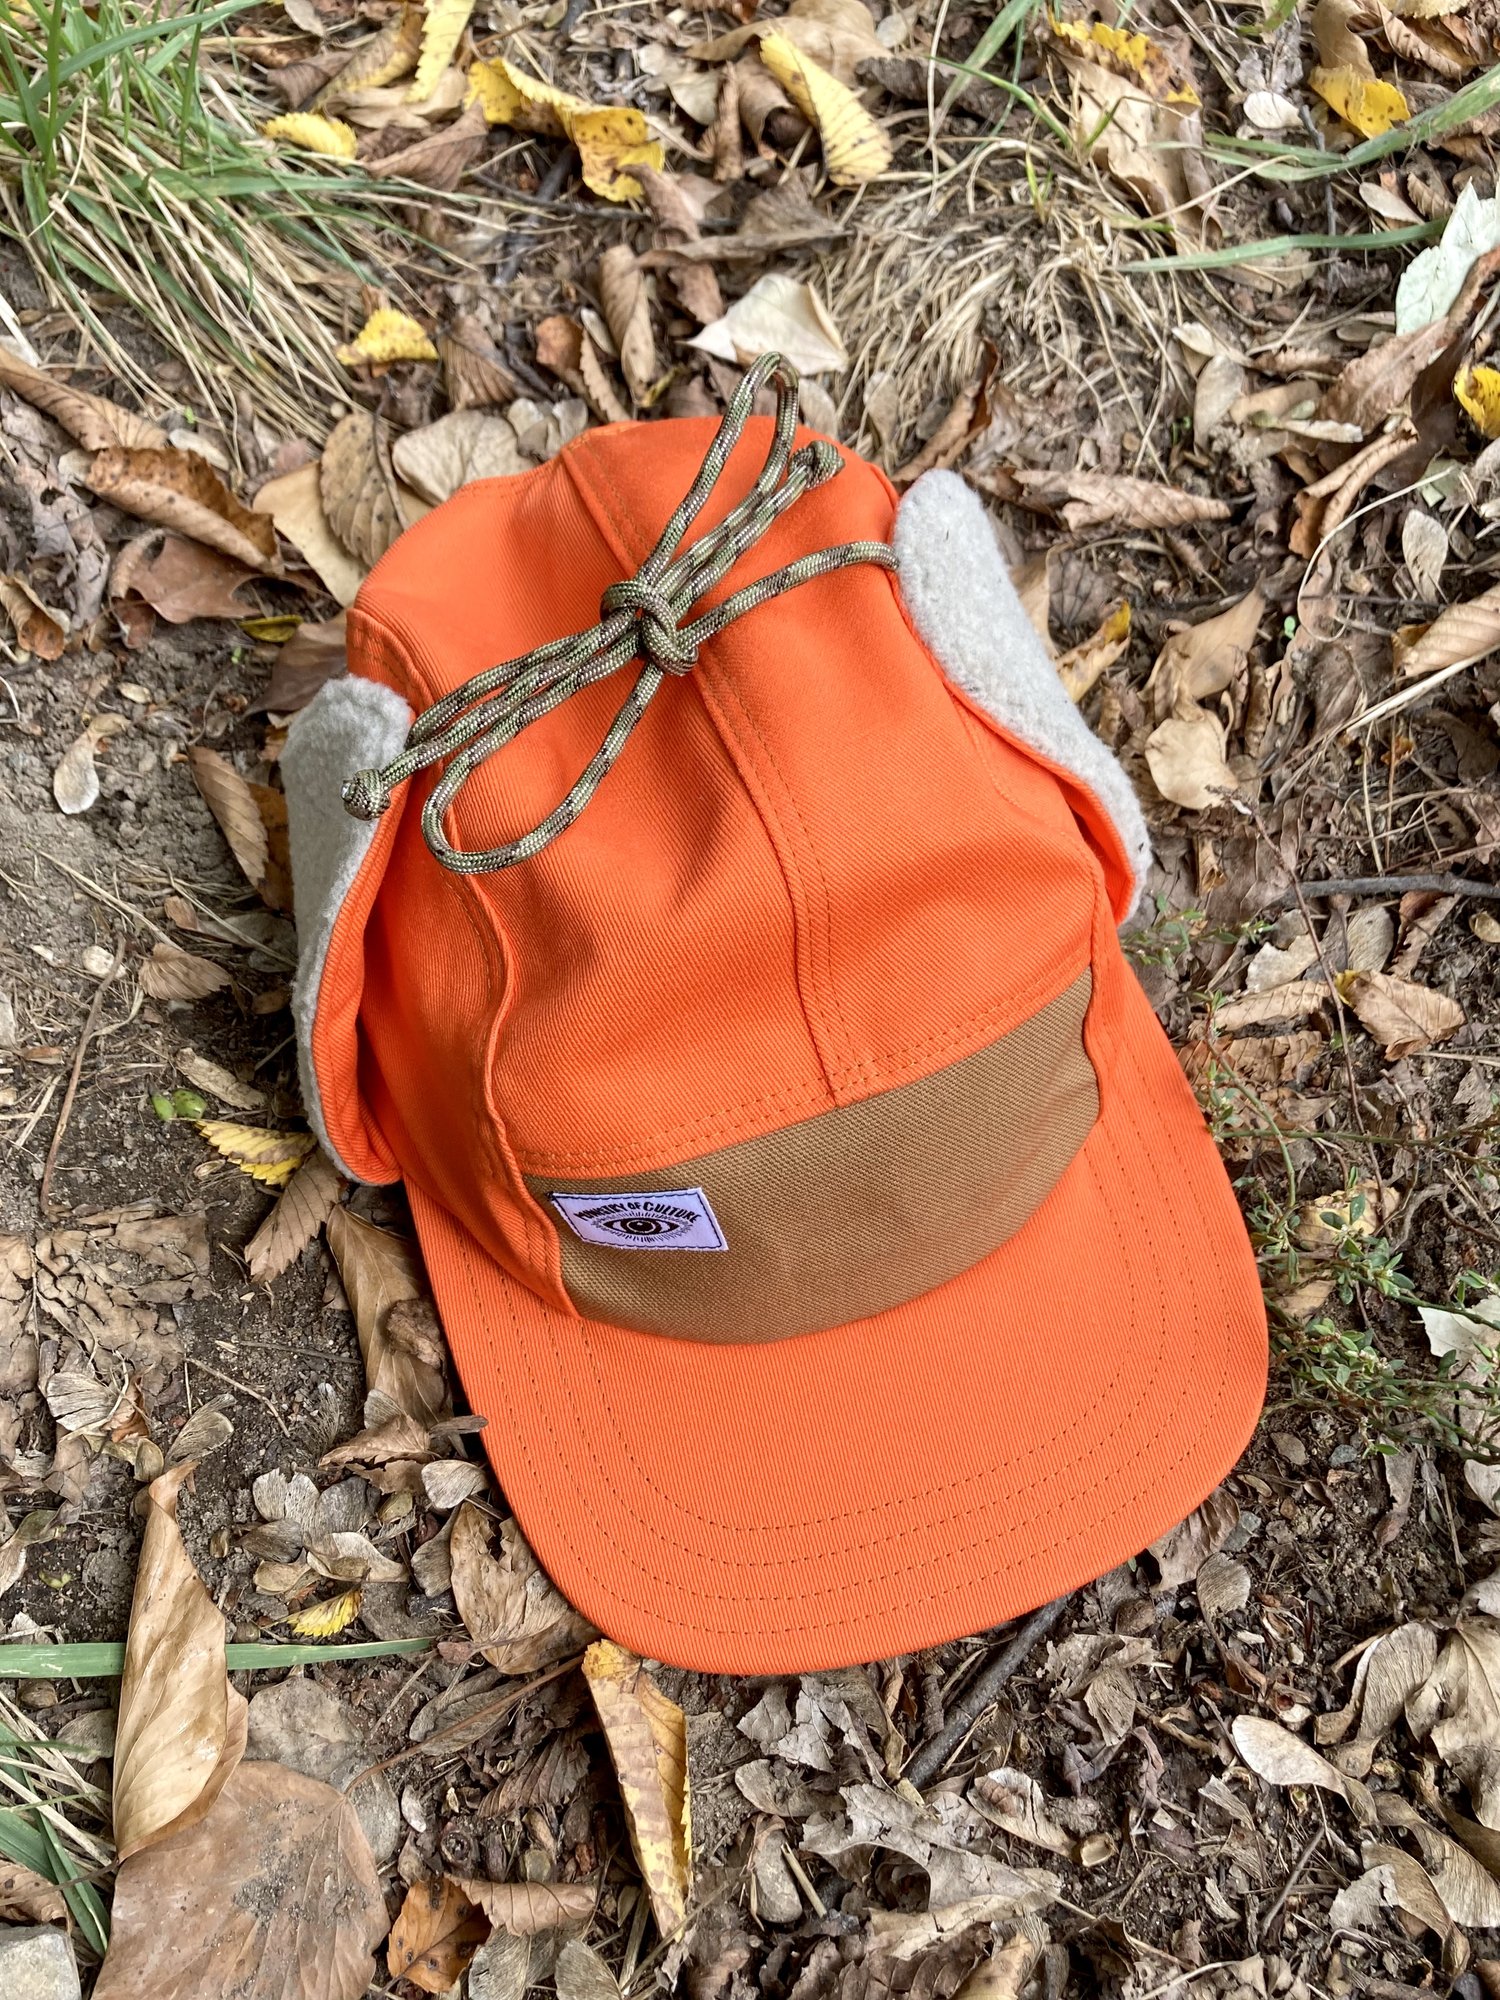 Ministry of Culture - Blaze Orange Canvas Ear Flap Hat, Hunter's Orange  Handmade 5 Panel Camp Hat